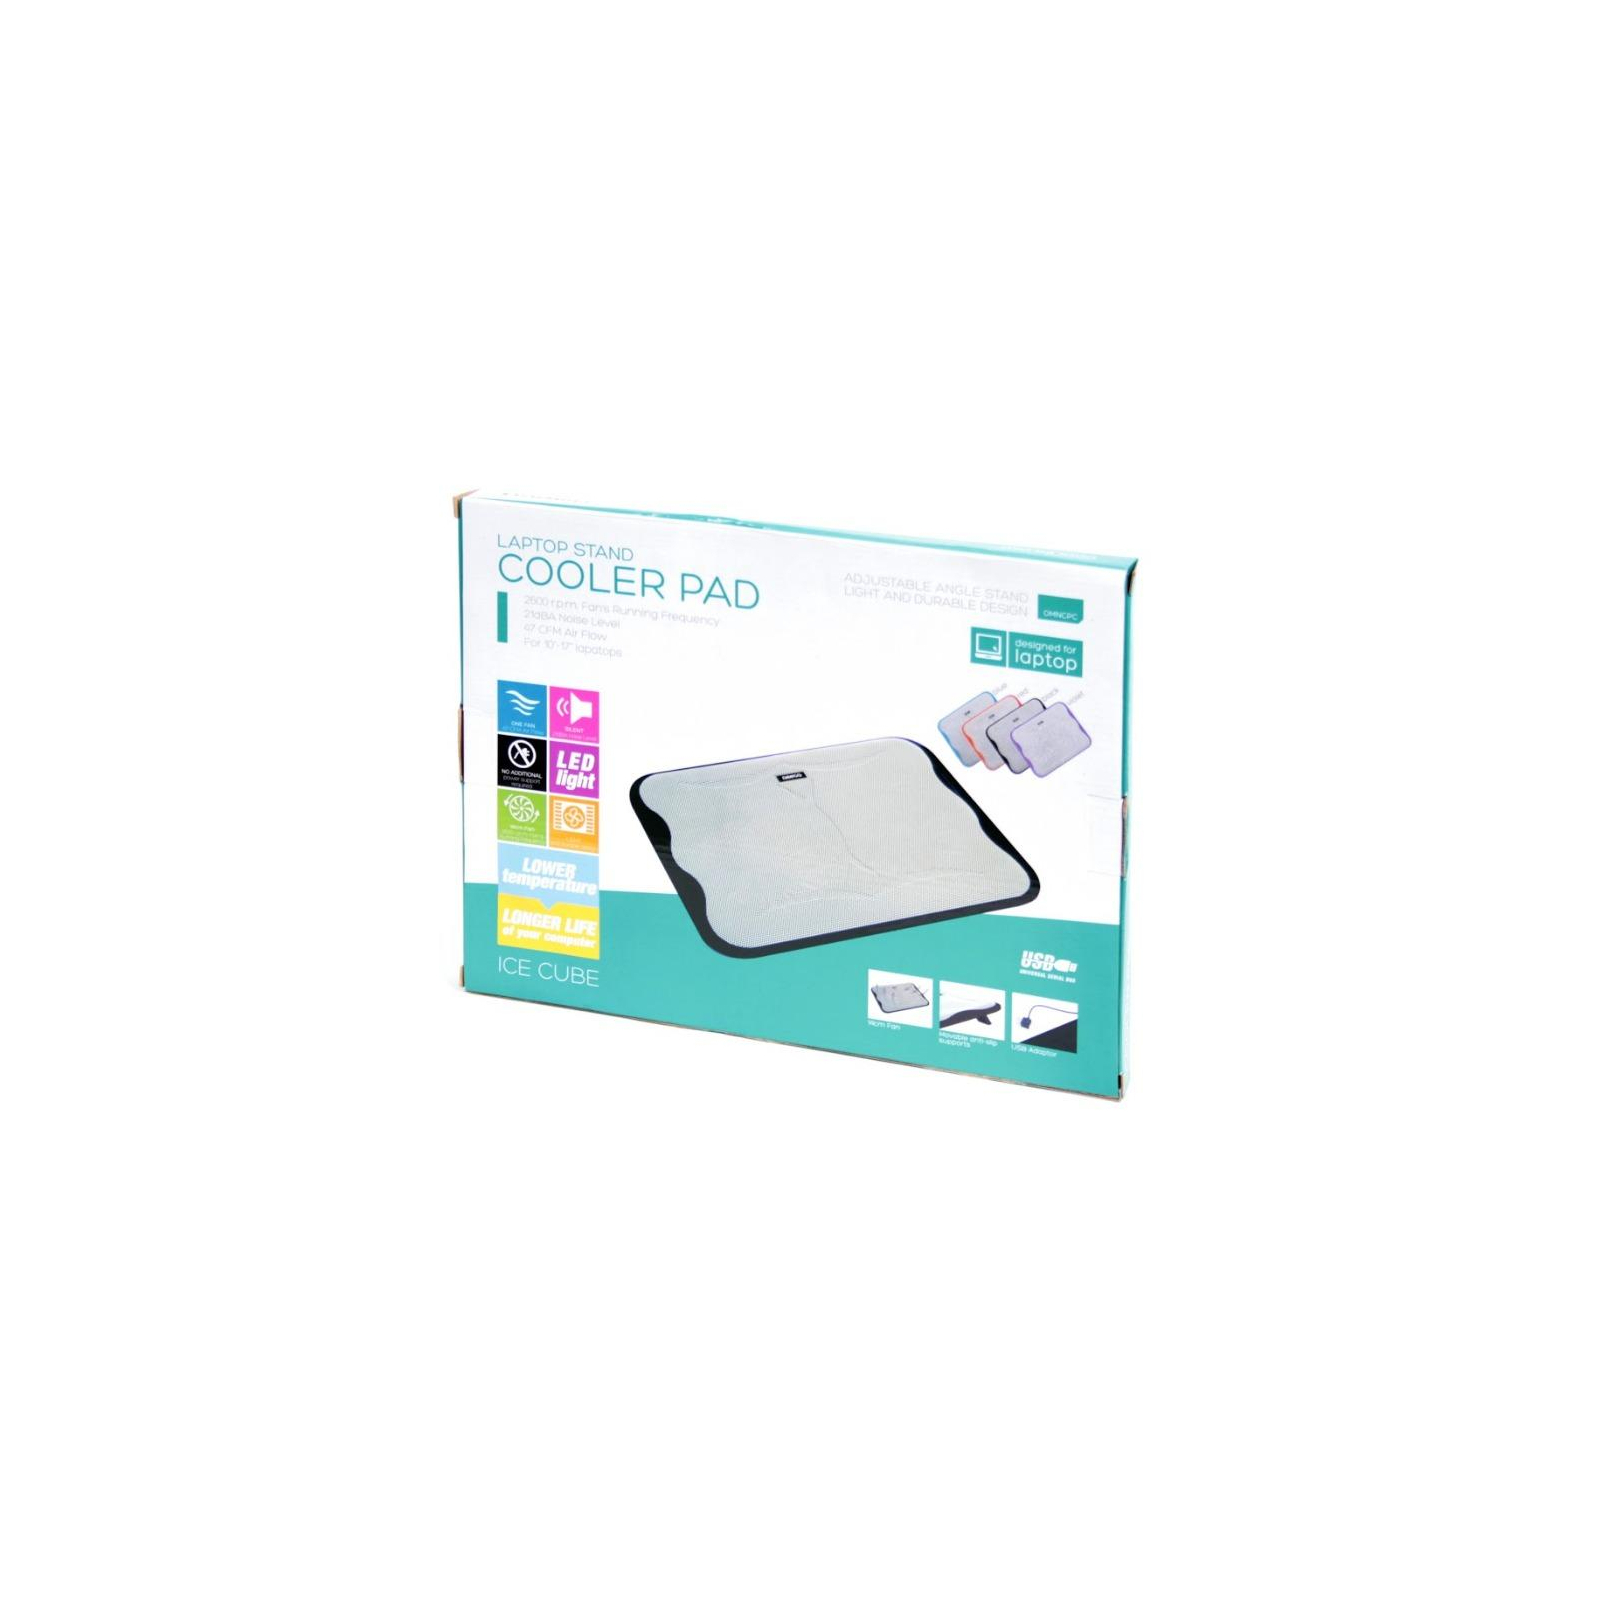 Підставка до ноутбука Omega Laptop Cooler pad "ICE CUBE" 14cm fan USB port black (OMNCPC) зображення 5